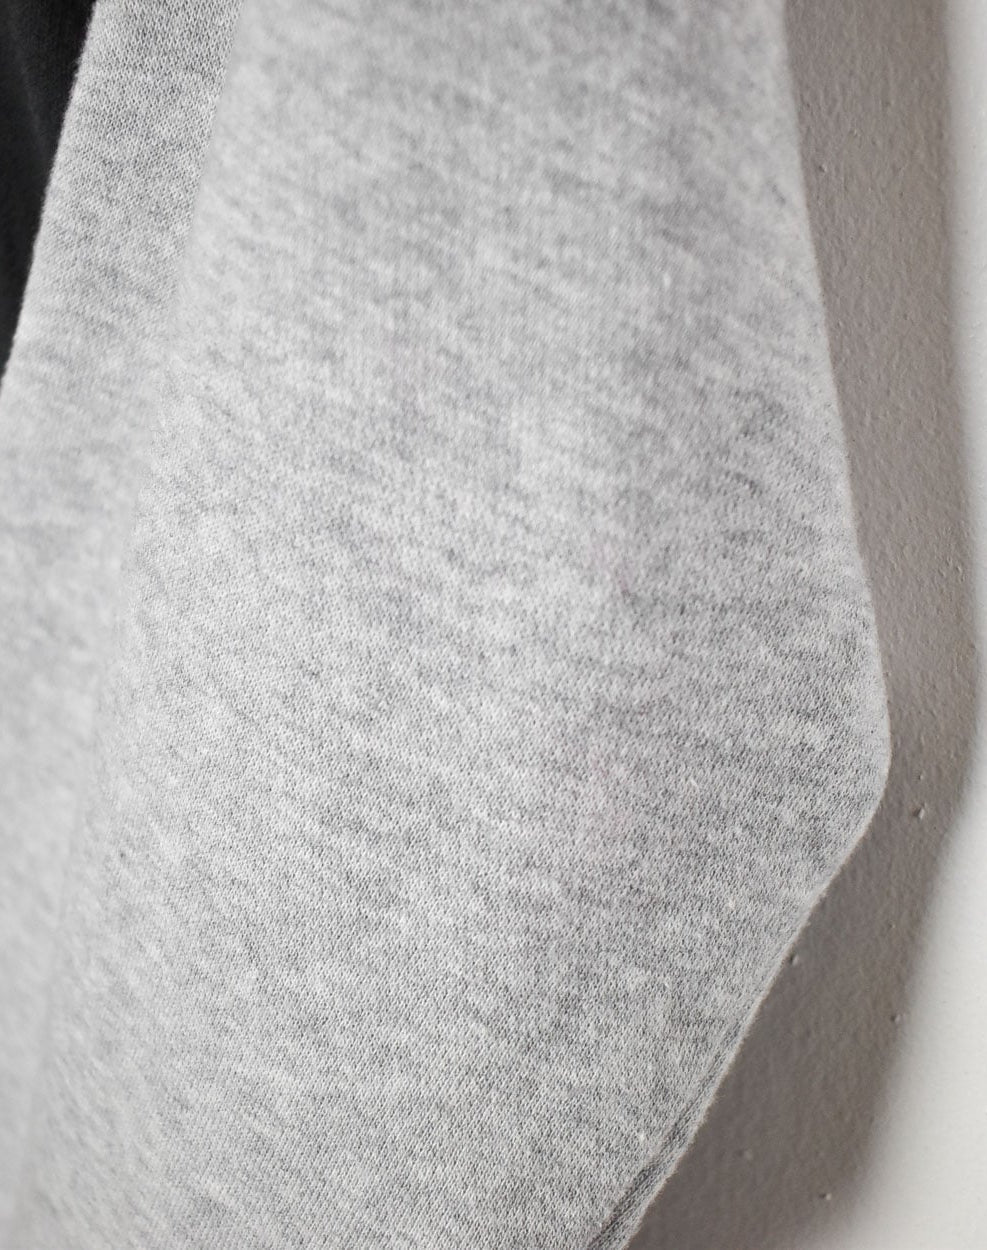 Black Polo Ralph Lauren Long Sleeved Polo Shirt - X-Small